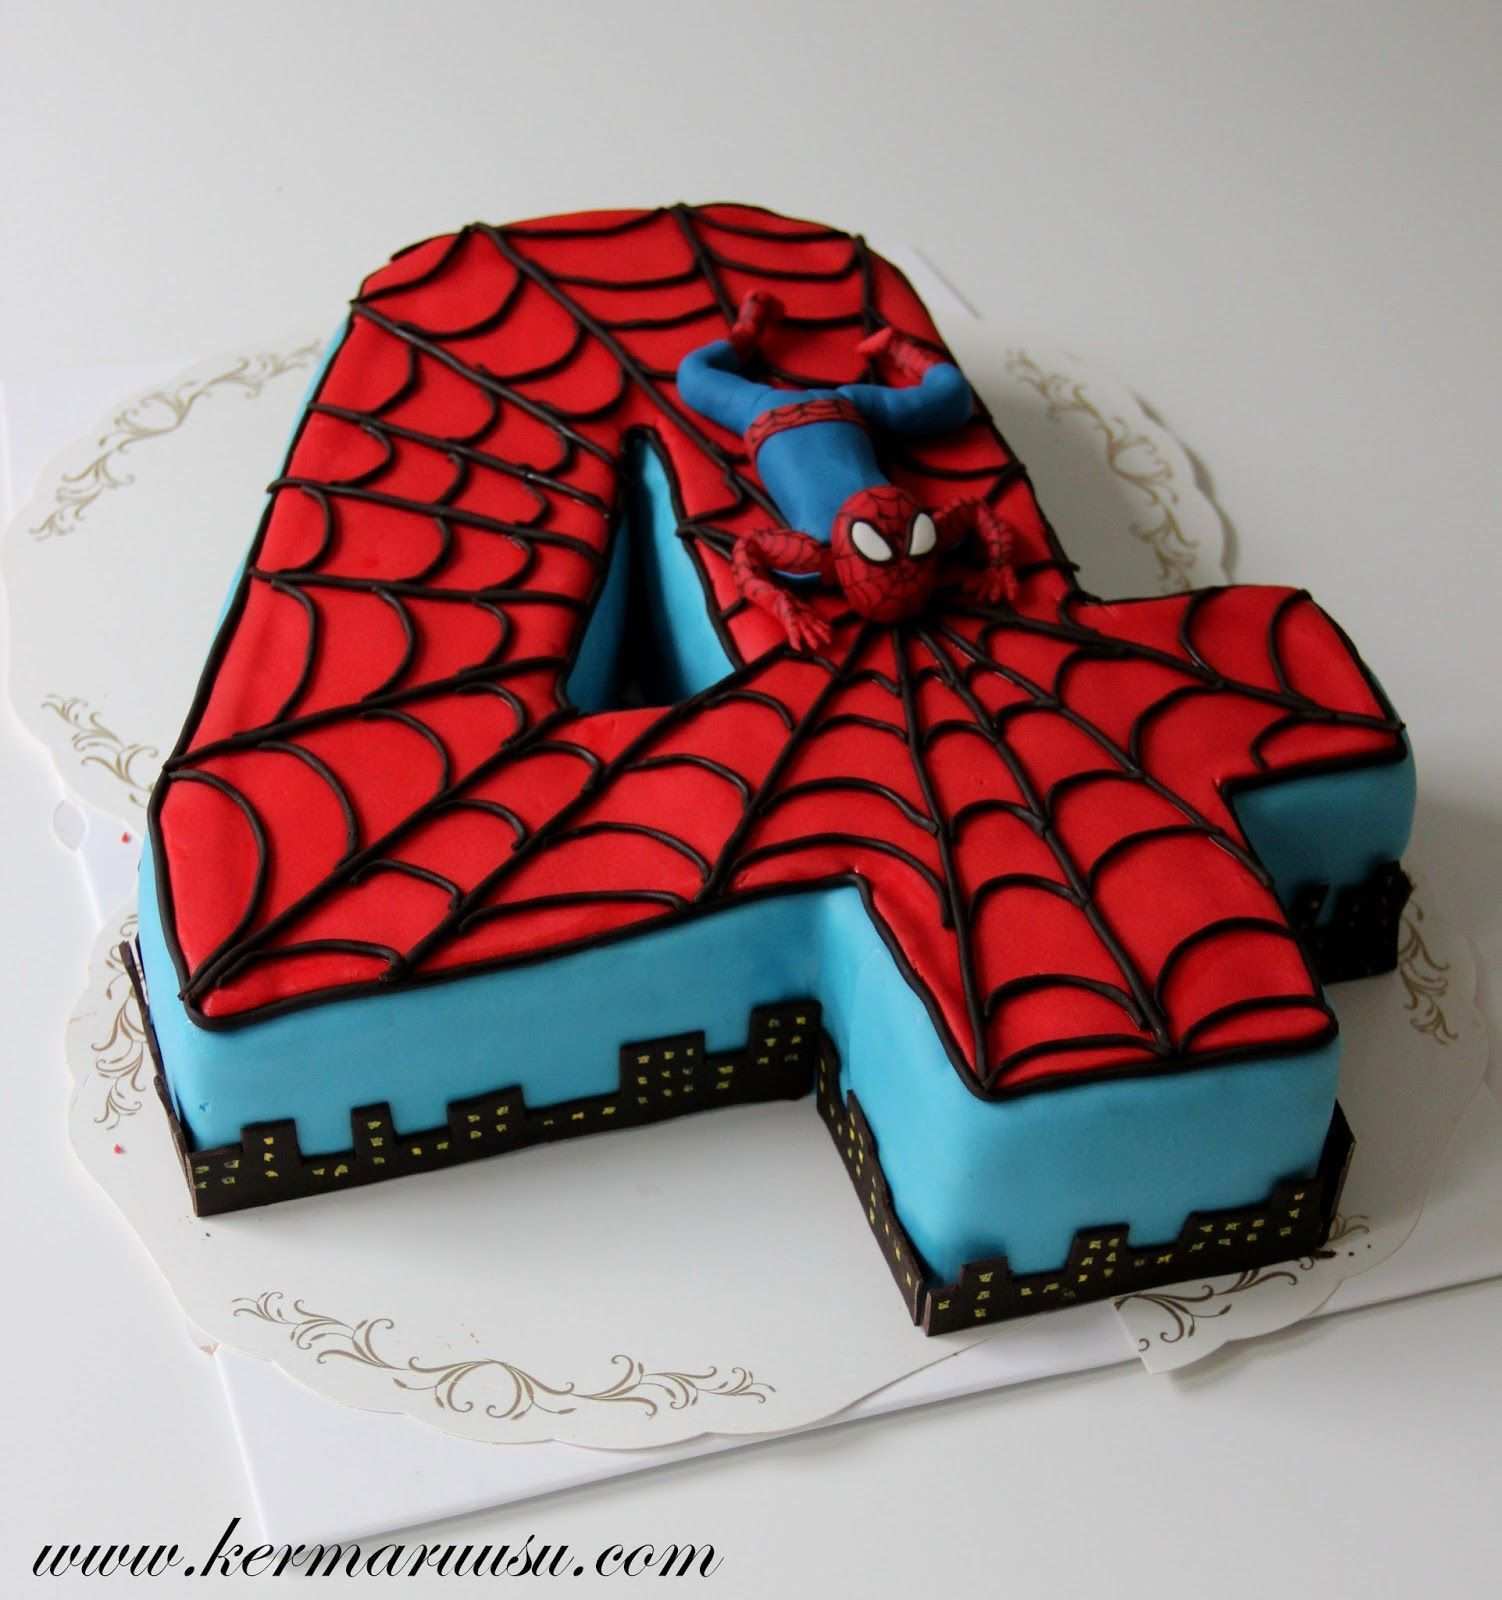 30 Amazing Image Of Spider Man Birthday Cakes Spider Man Birthday Cakes Spiderman Cake Cak Spiderman Birthday Cake 4th Birthday Cakes Birthday Cakes For Men